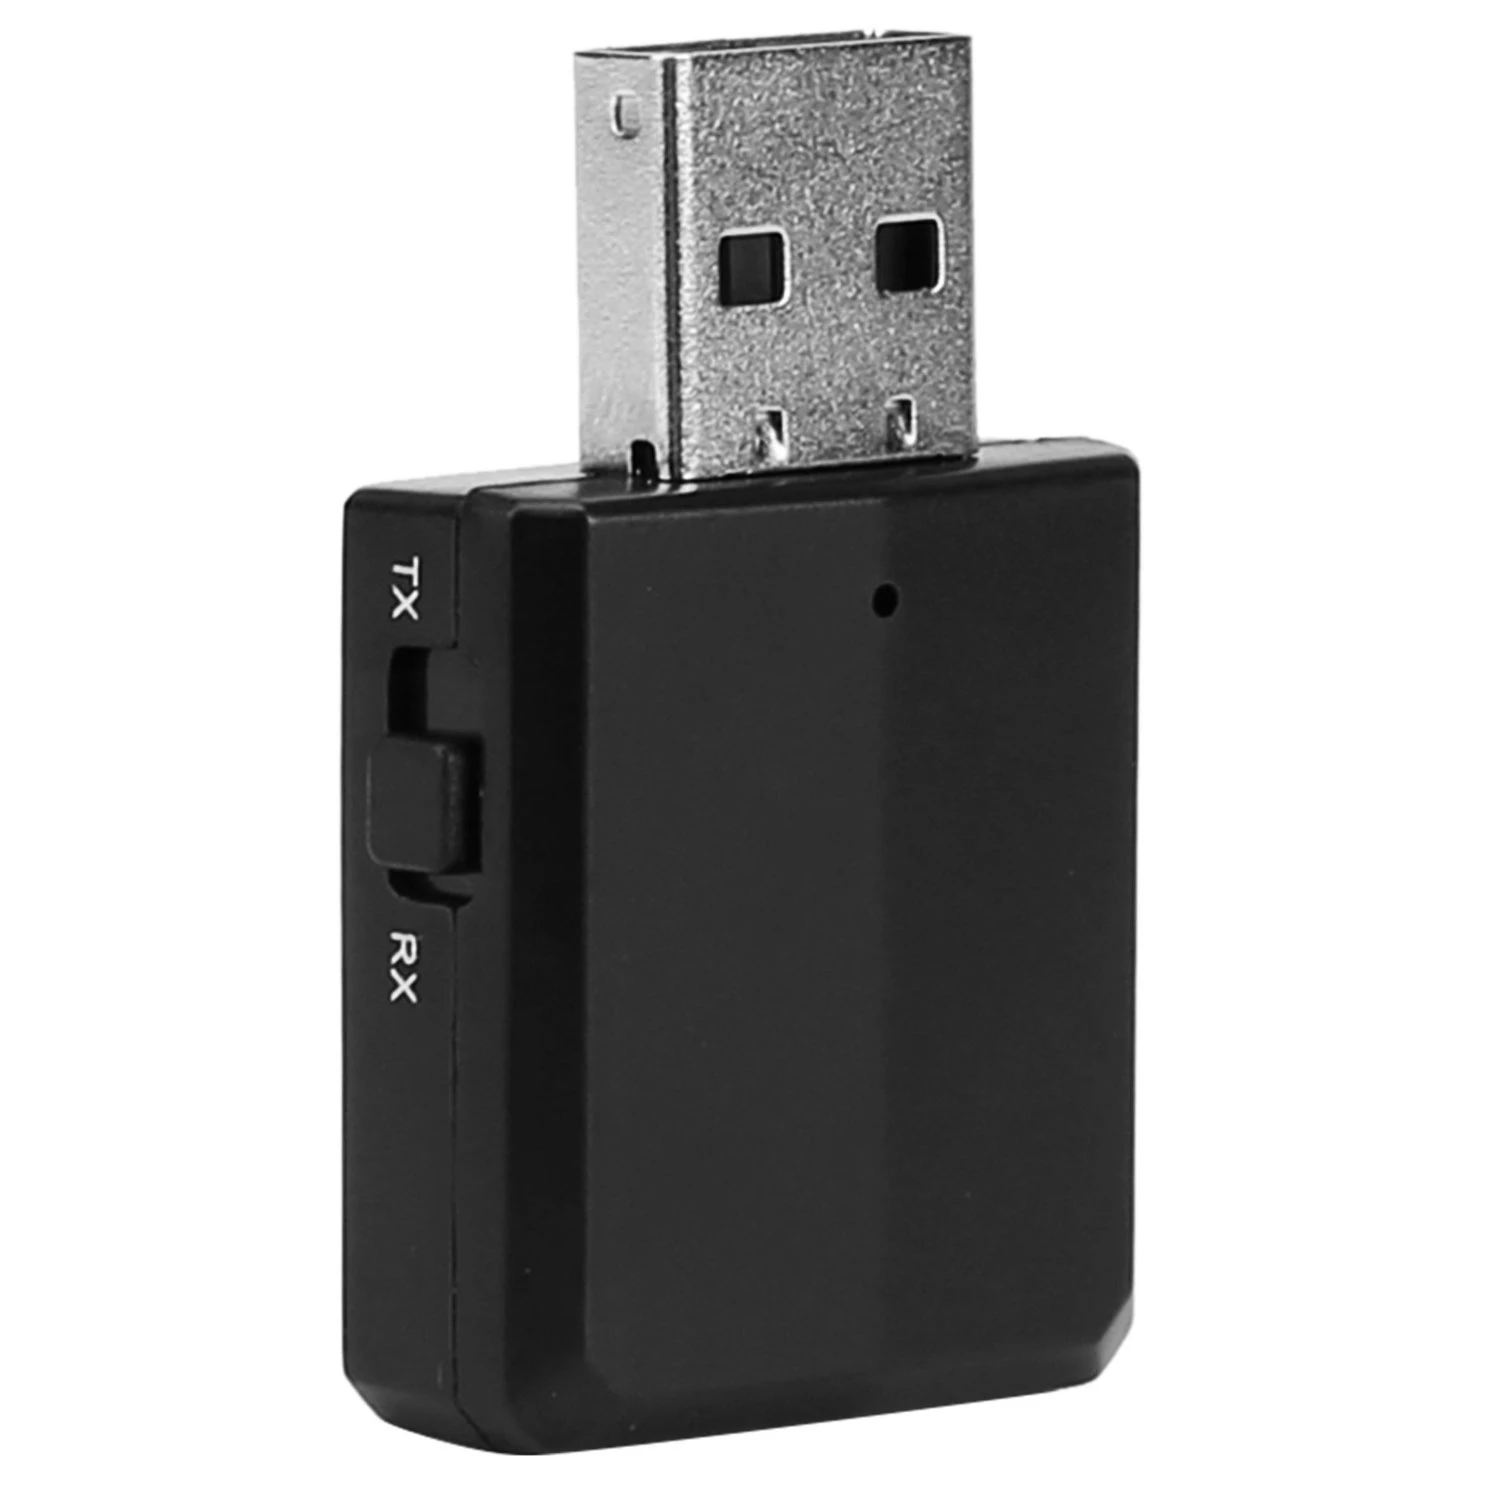 3 IN 1 Wireless V5.0 USB Audio Transmitter Receiver EDR Adapter Music Streaming For TV PC Headphones